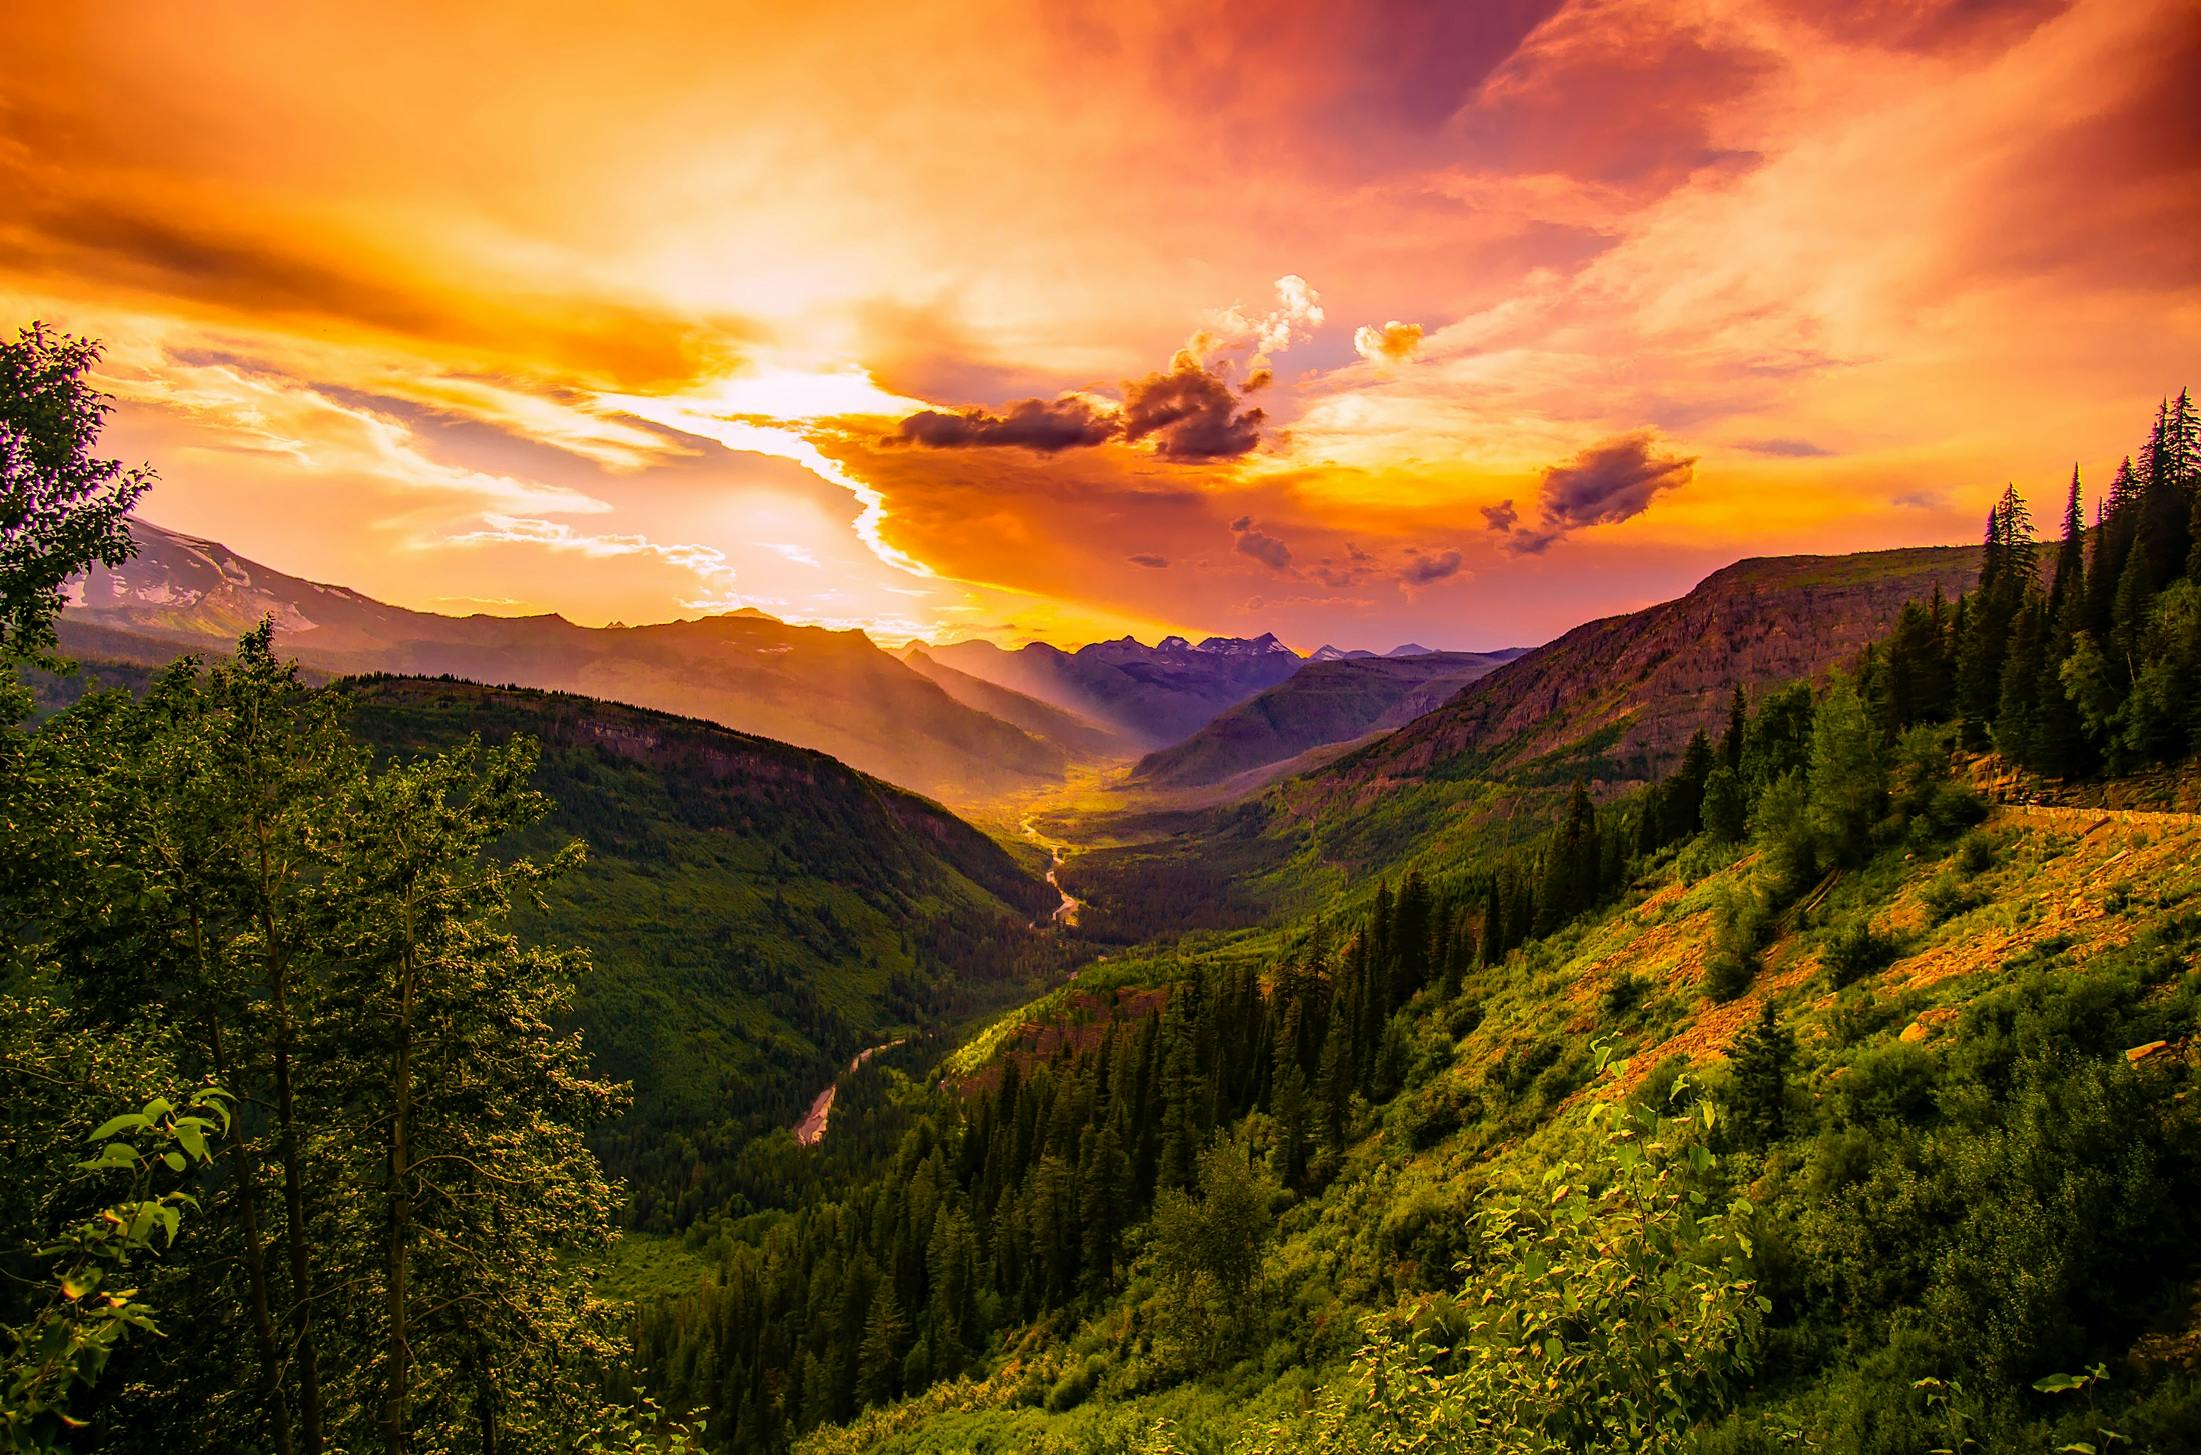 1000+ Beautiful Mountains Photos · Pexels · Free Stock Photos